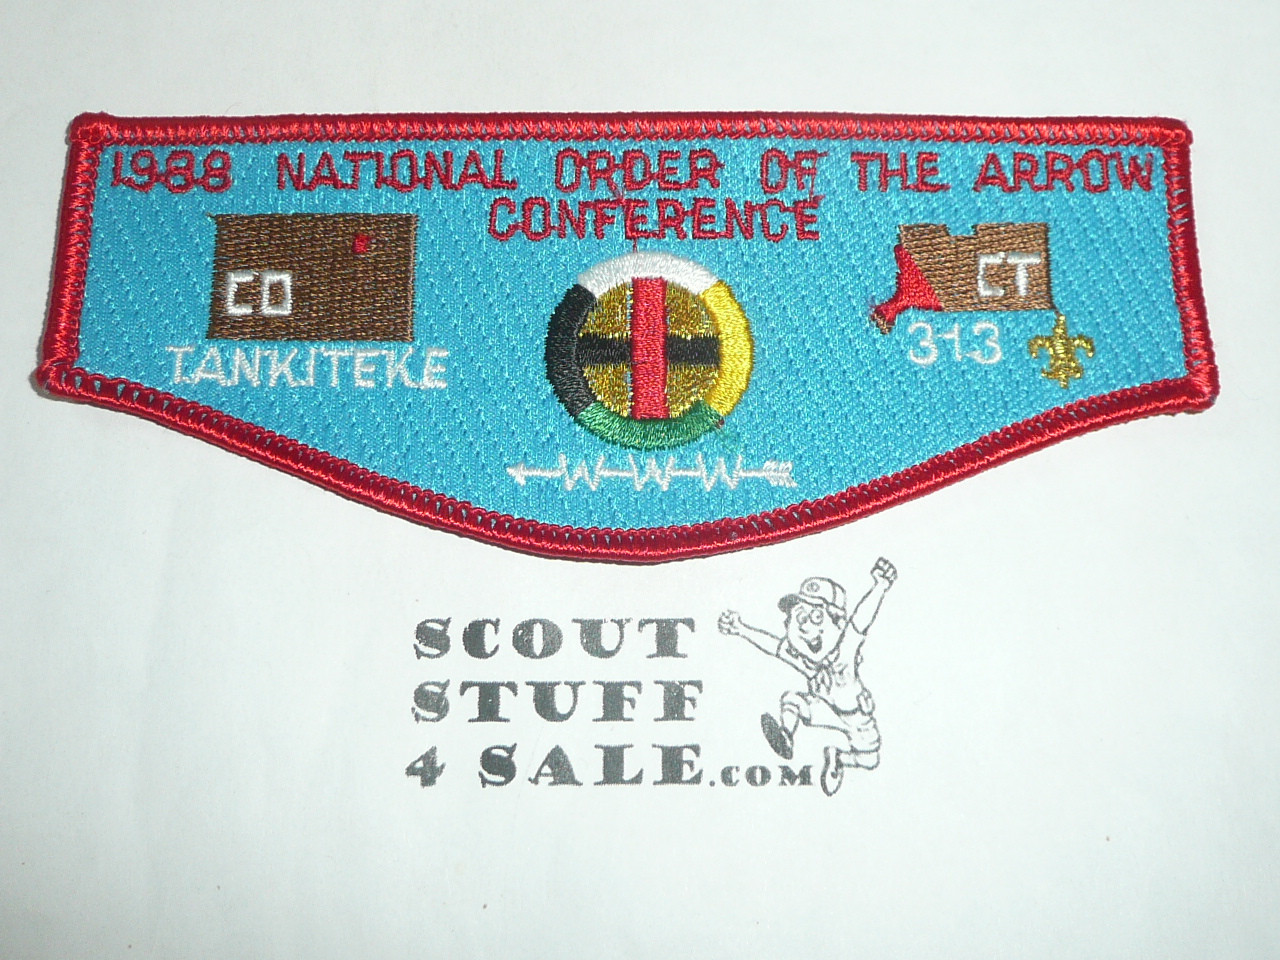 Order of the Arrow Lodge #313 Tankiteke s30 1989 NOAC Flap Patch